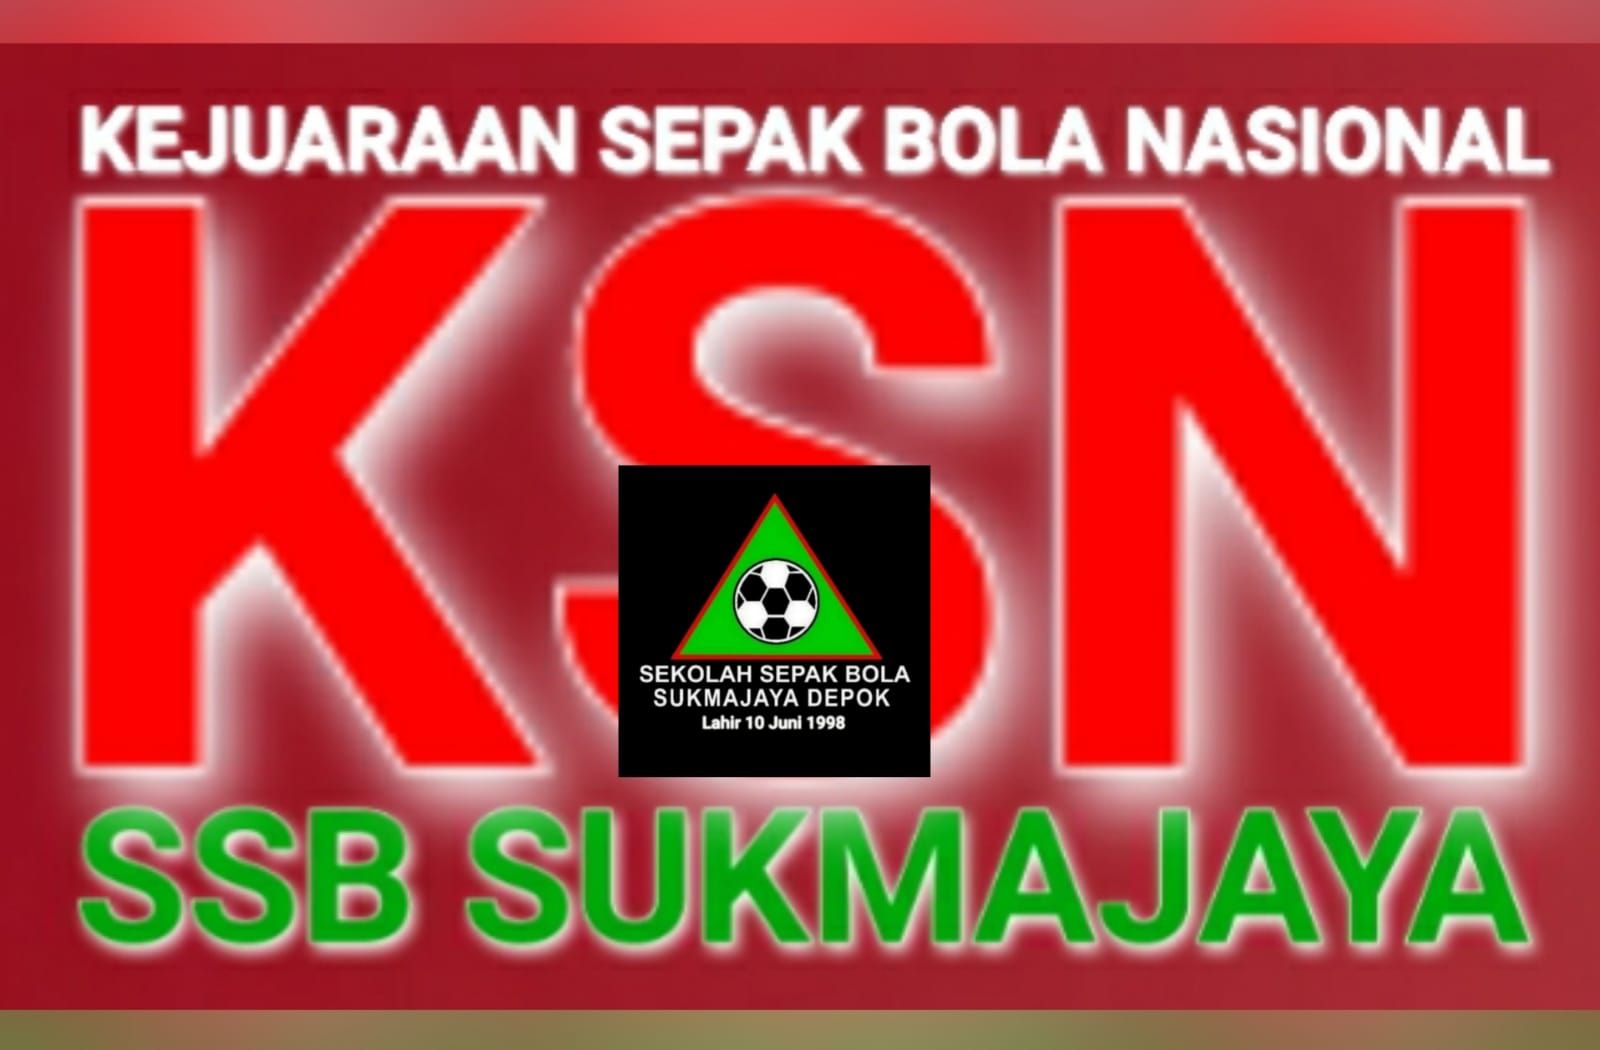 Cover Kejuaraan Sepak Bola Nasional (KSN) SSB Sukmajaya.